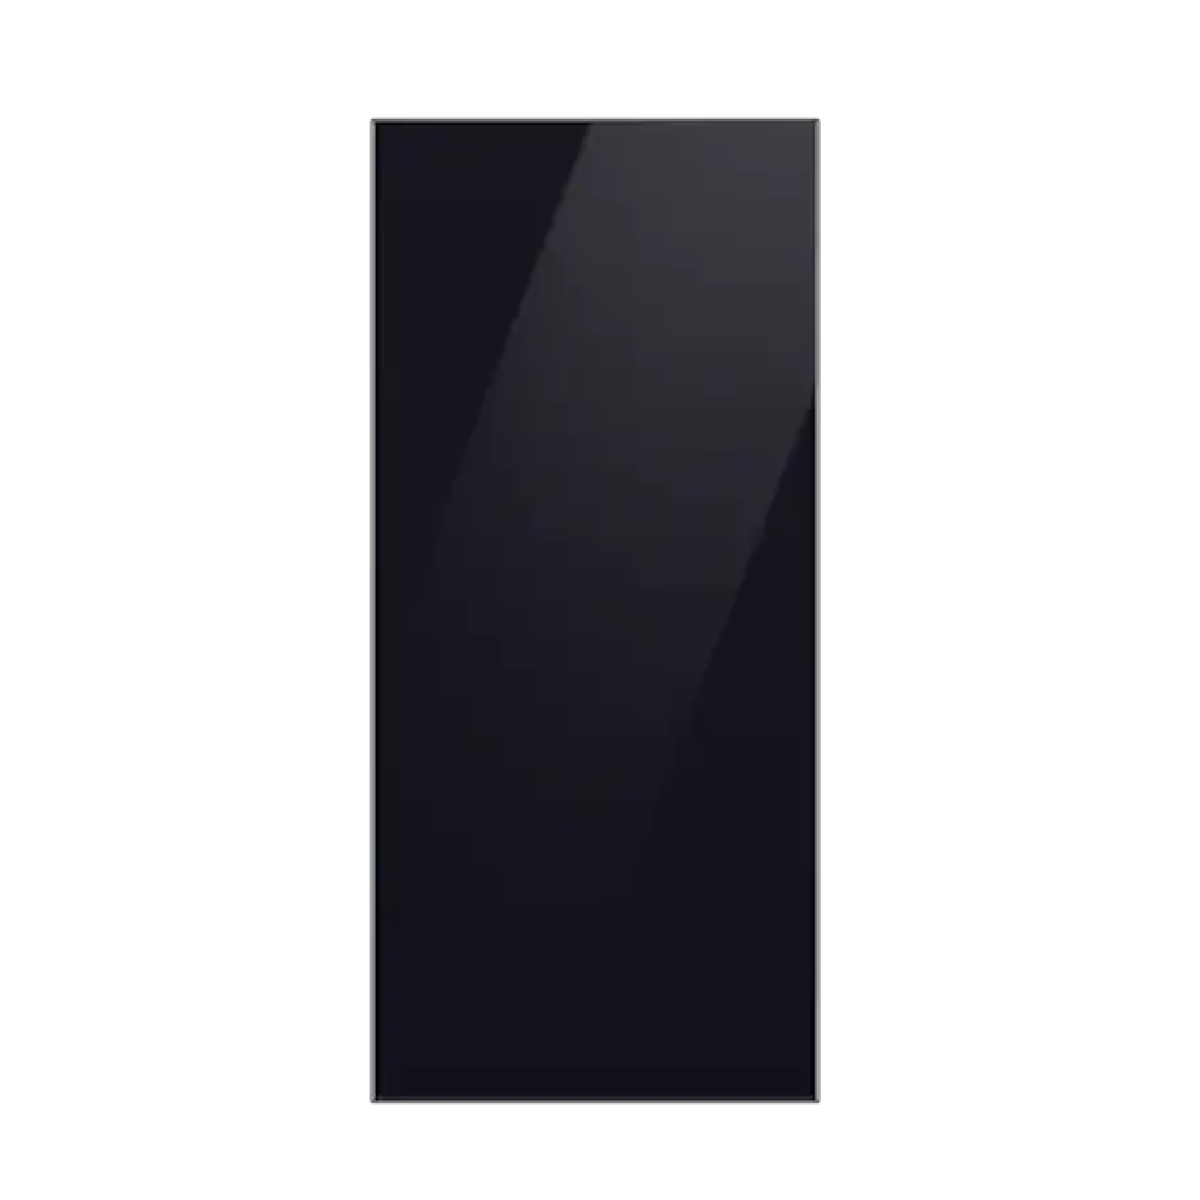 Samsung Upper Part Door Panel for Bespoke FDR RF60 Refrigerator, Clean Black, RA-F17DUU22/AE